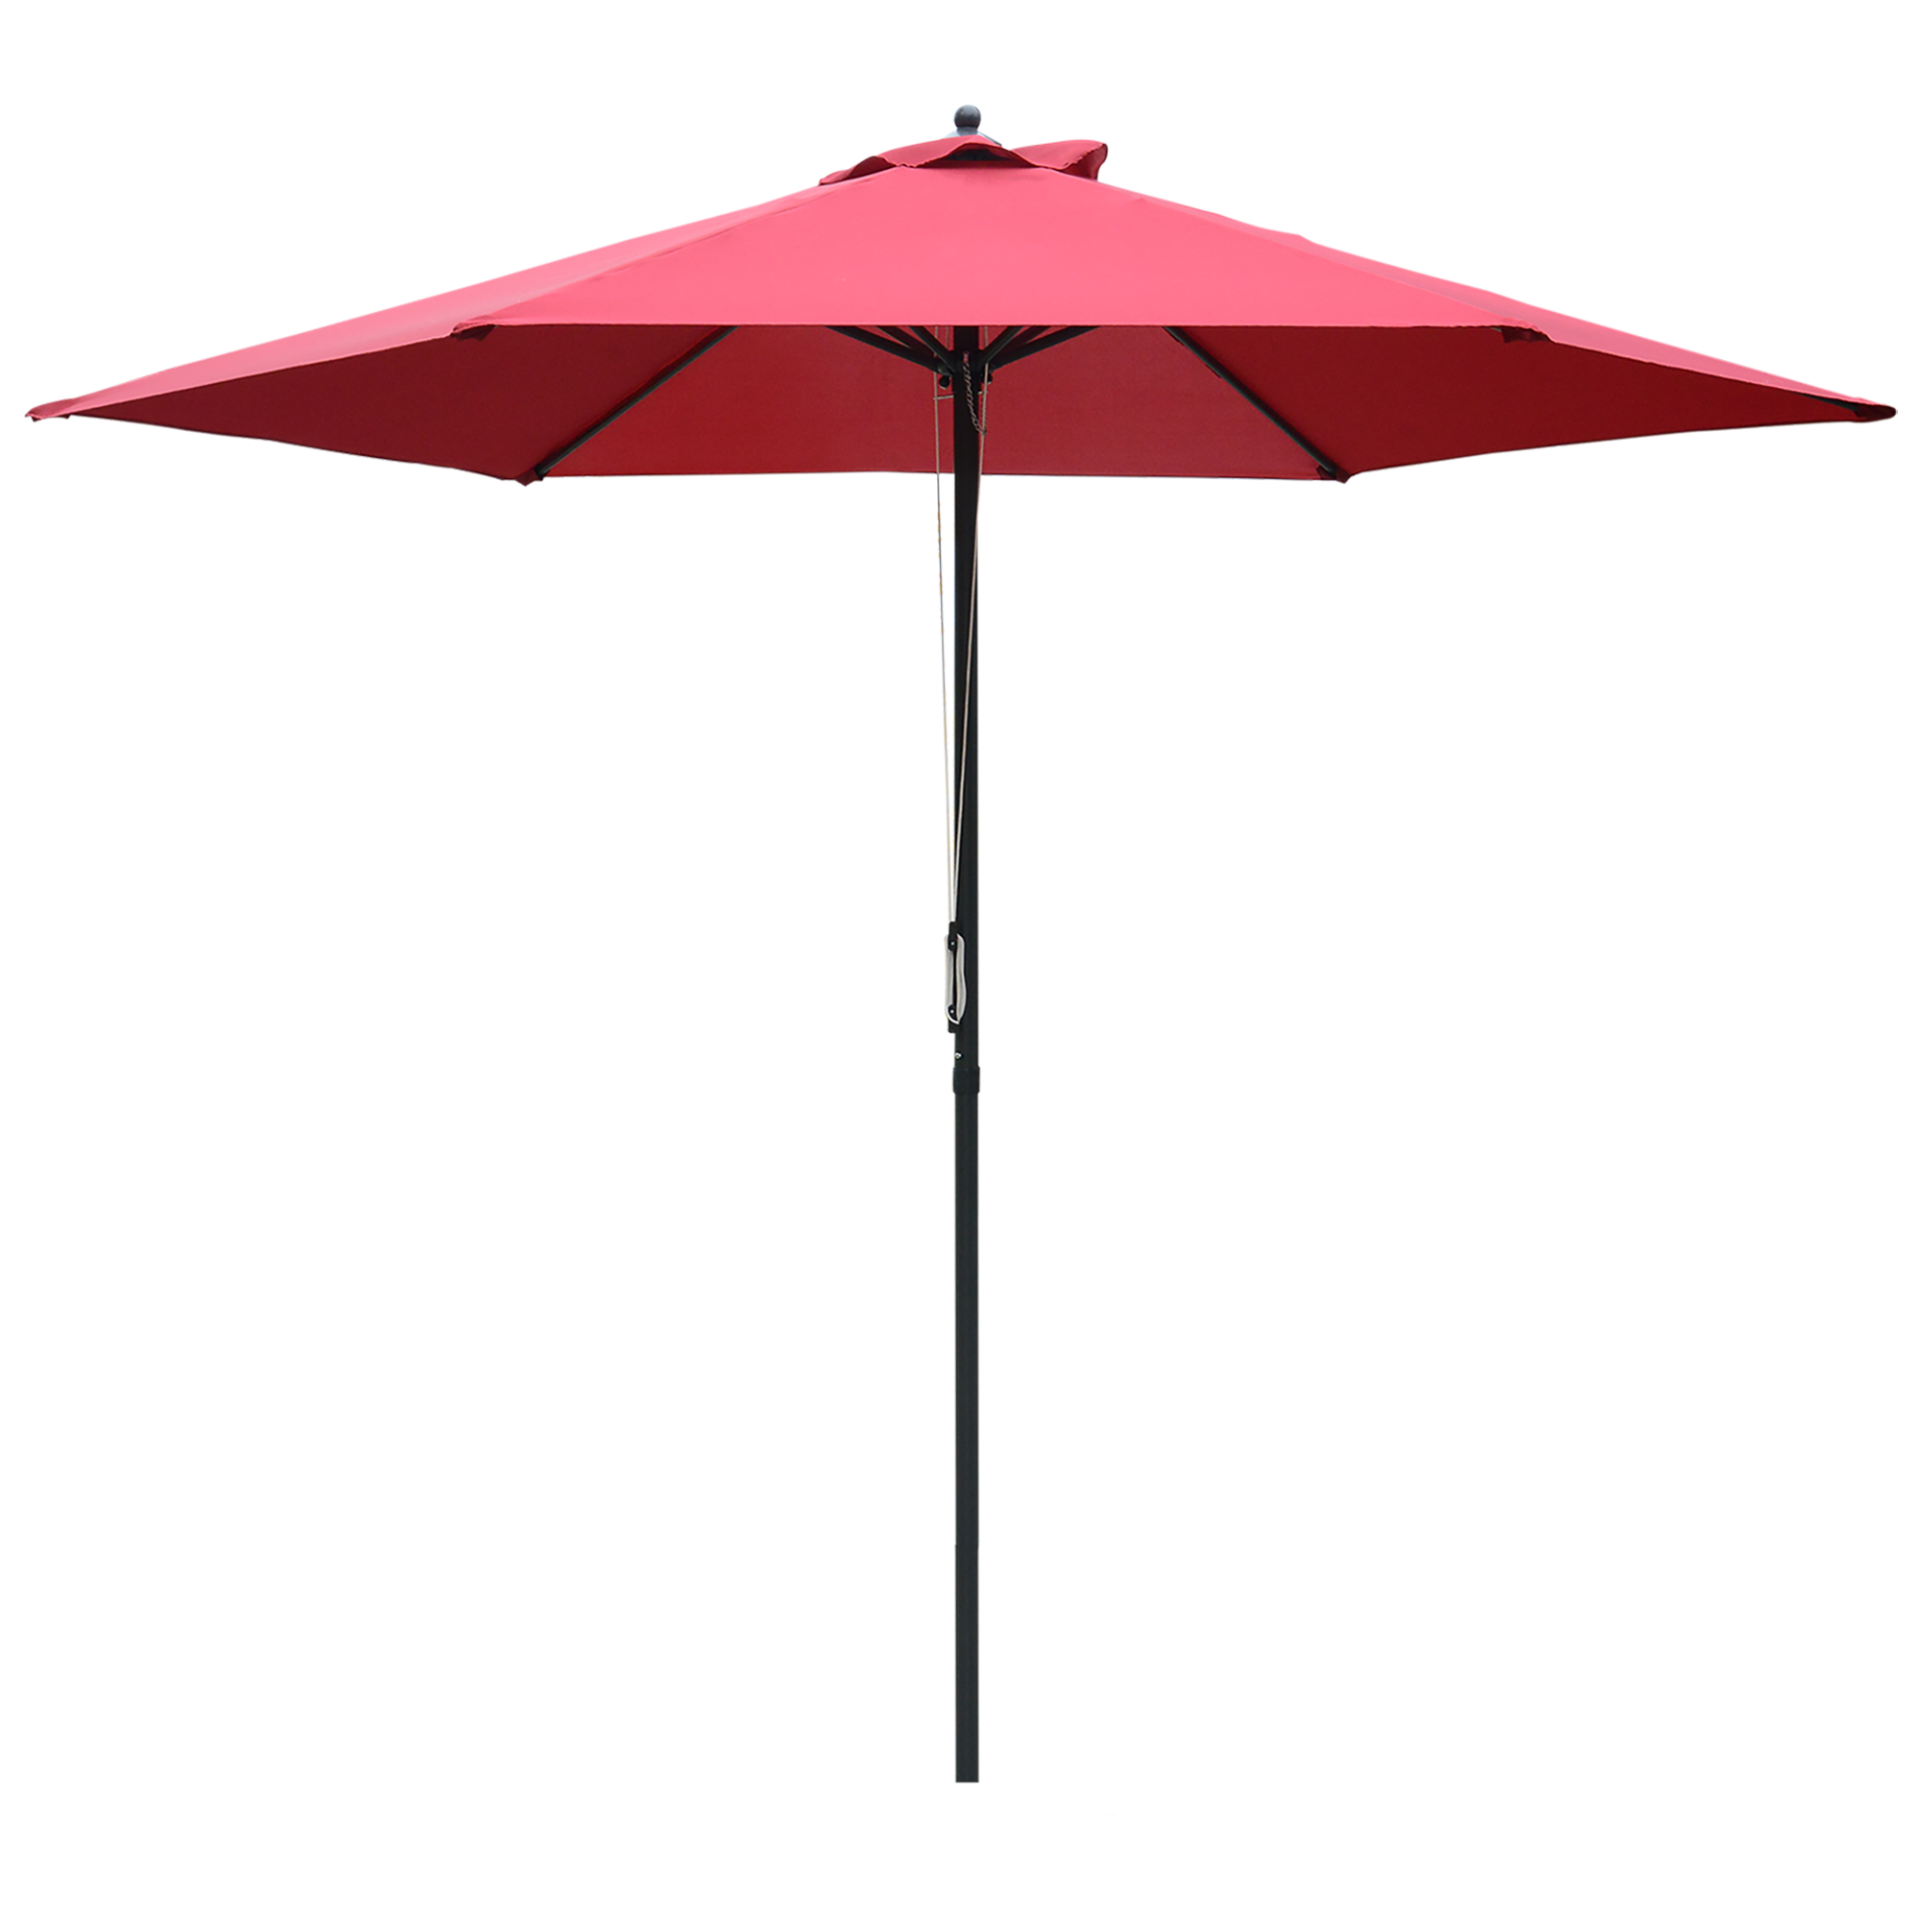 Outsunny 2.8m Patio Parasols Umbrellas Outdoor 6 Ribs Sunshade Canopy Manual Push Garden Backyard Furniture, Wine Red